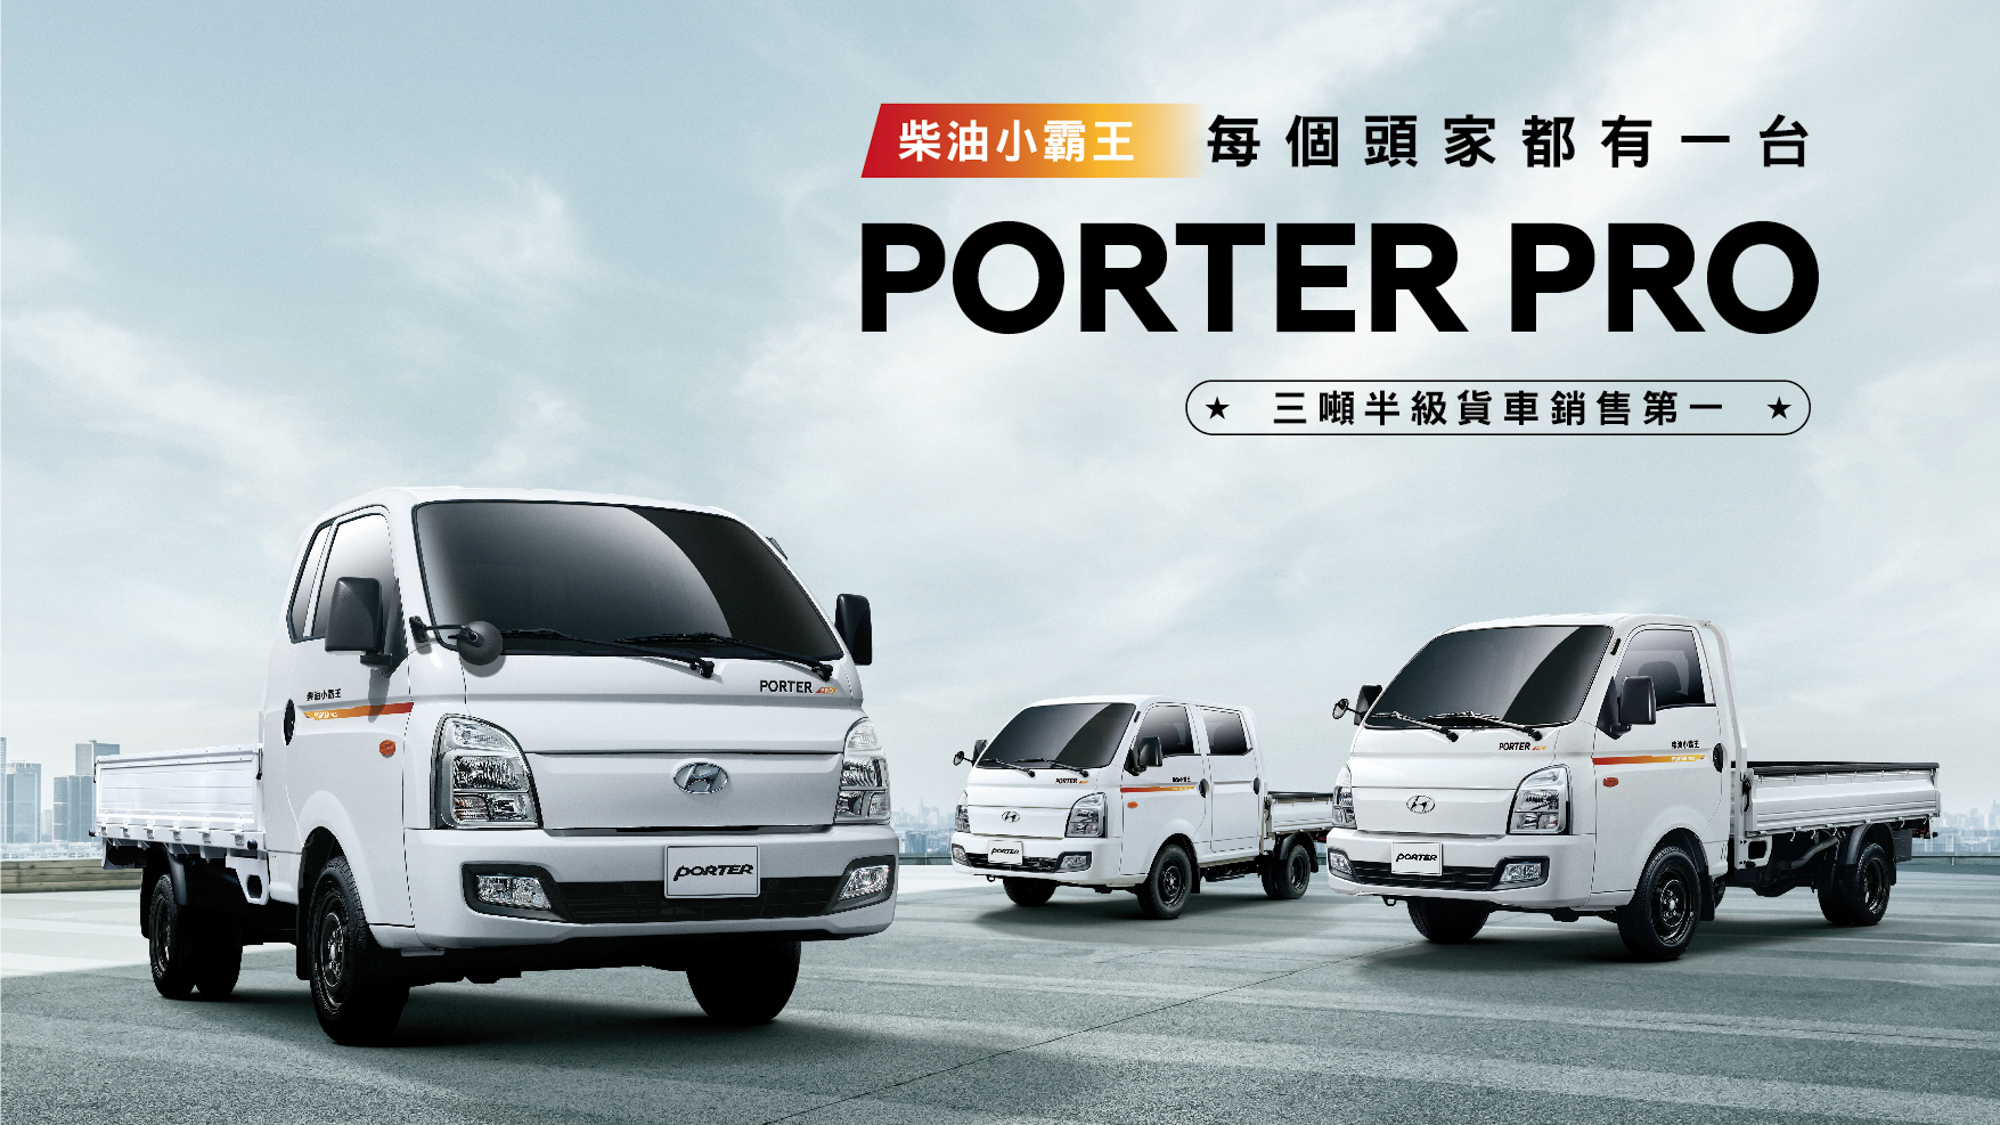 ▲ Hyundai Porter Pro 單月銷售創新高 單月 499 輛領牌新車